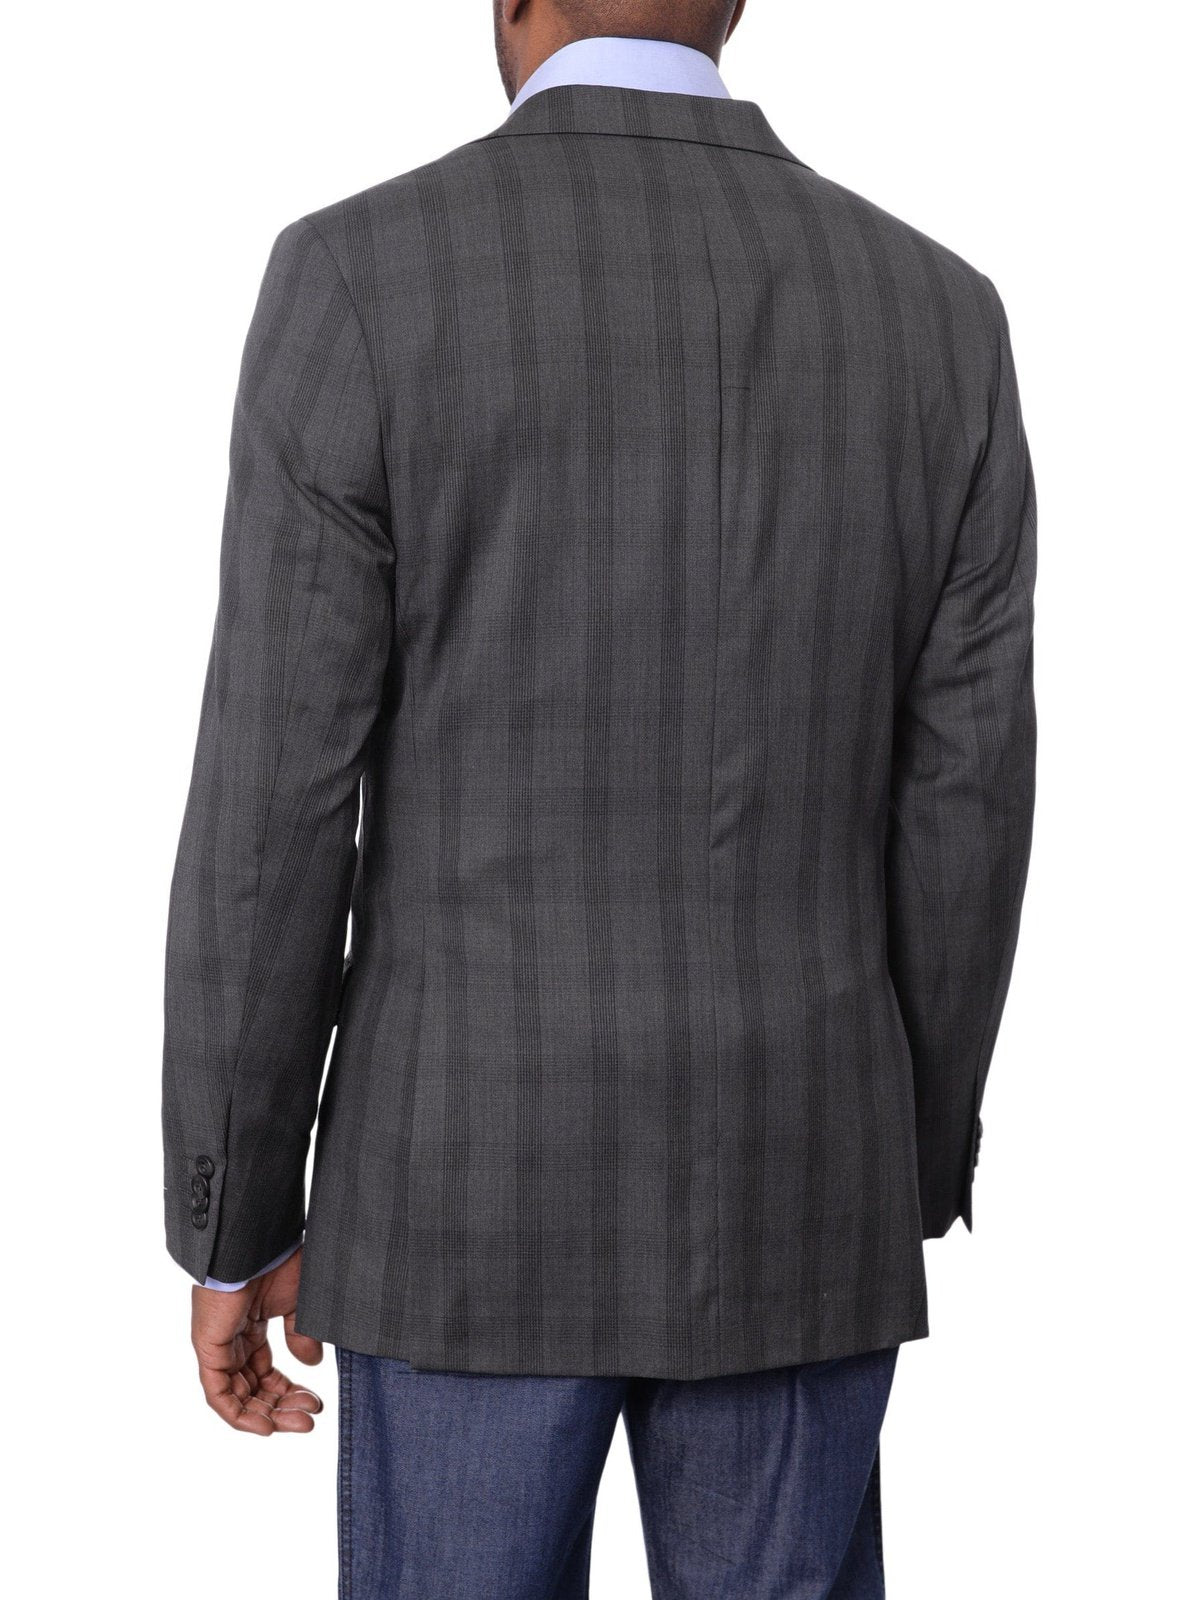 Prontomoda BLAZERS Prontomoda Men's Gray Plaid 100% Wool Slim Fit Blazer Sport Coat